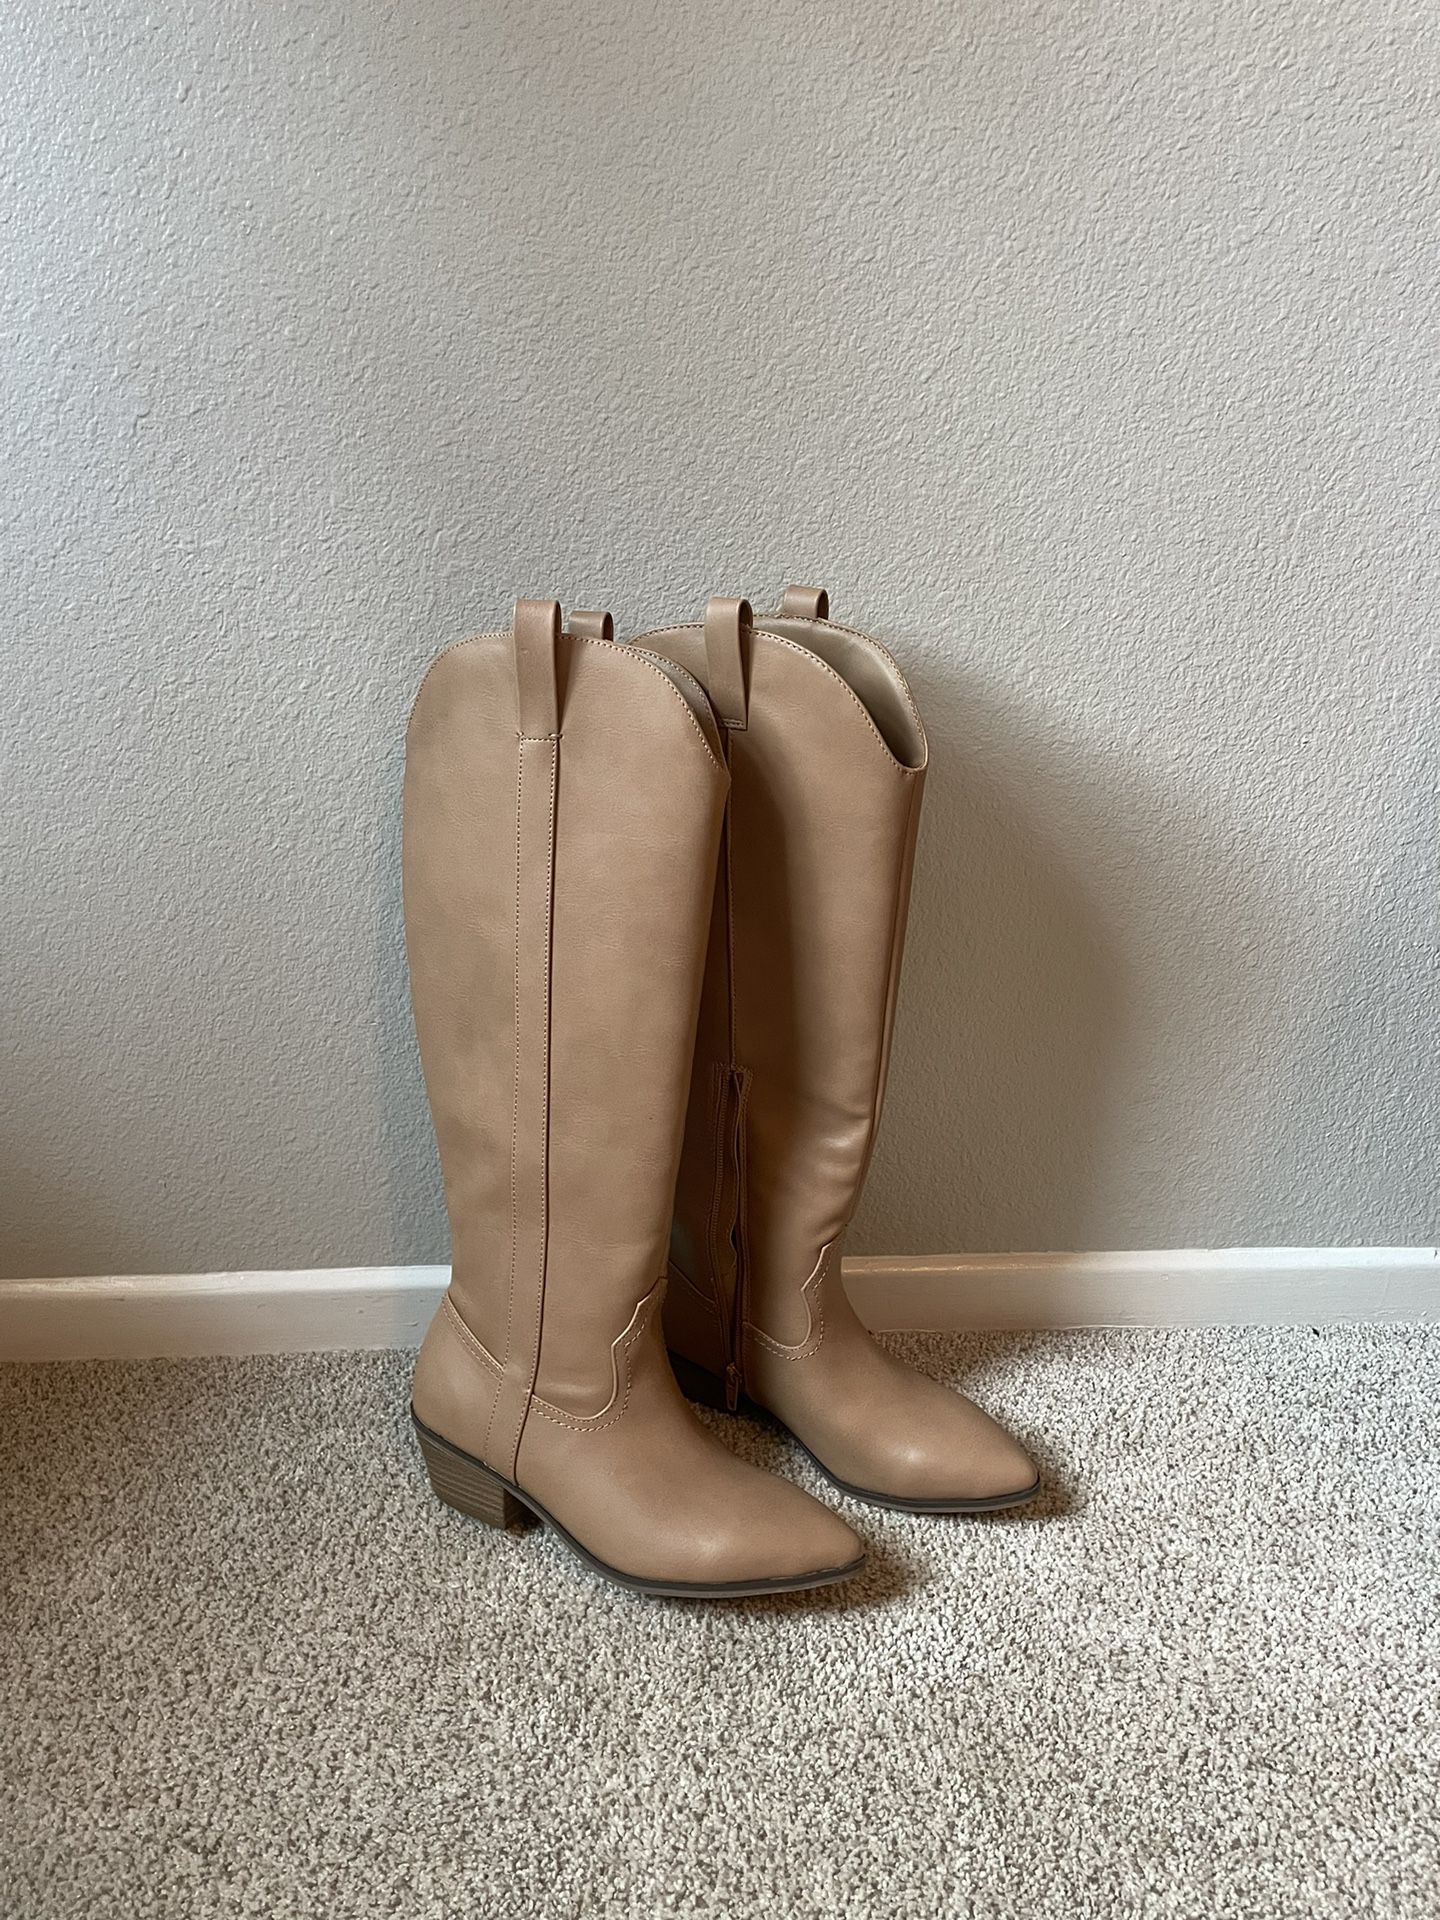 Women’s Tall Cowboy boots - size 7 